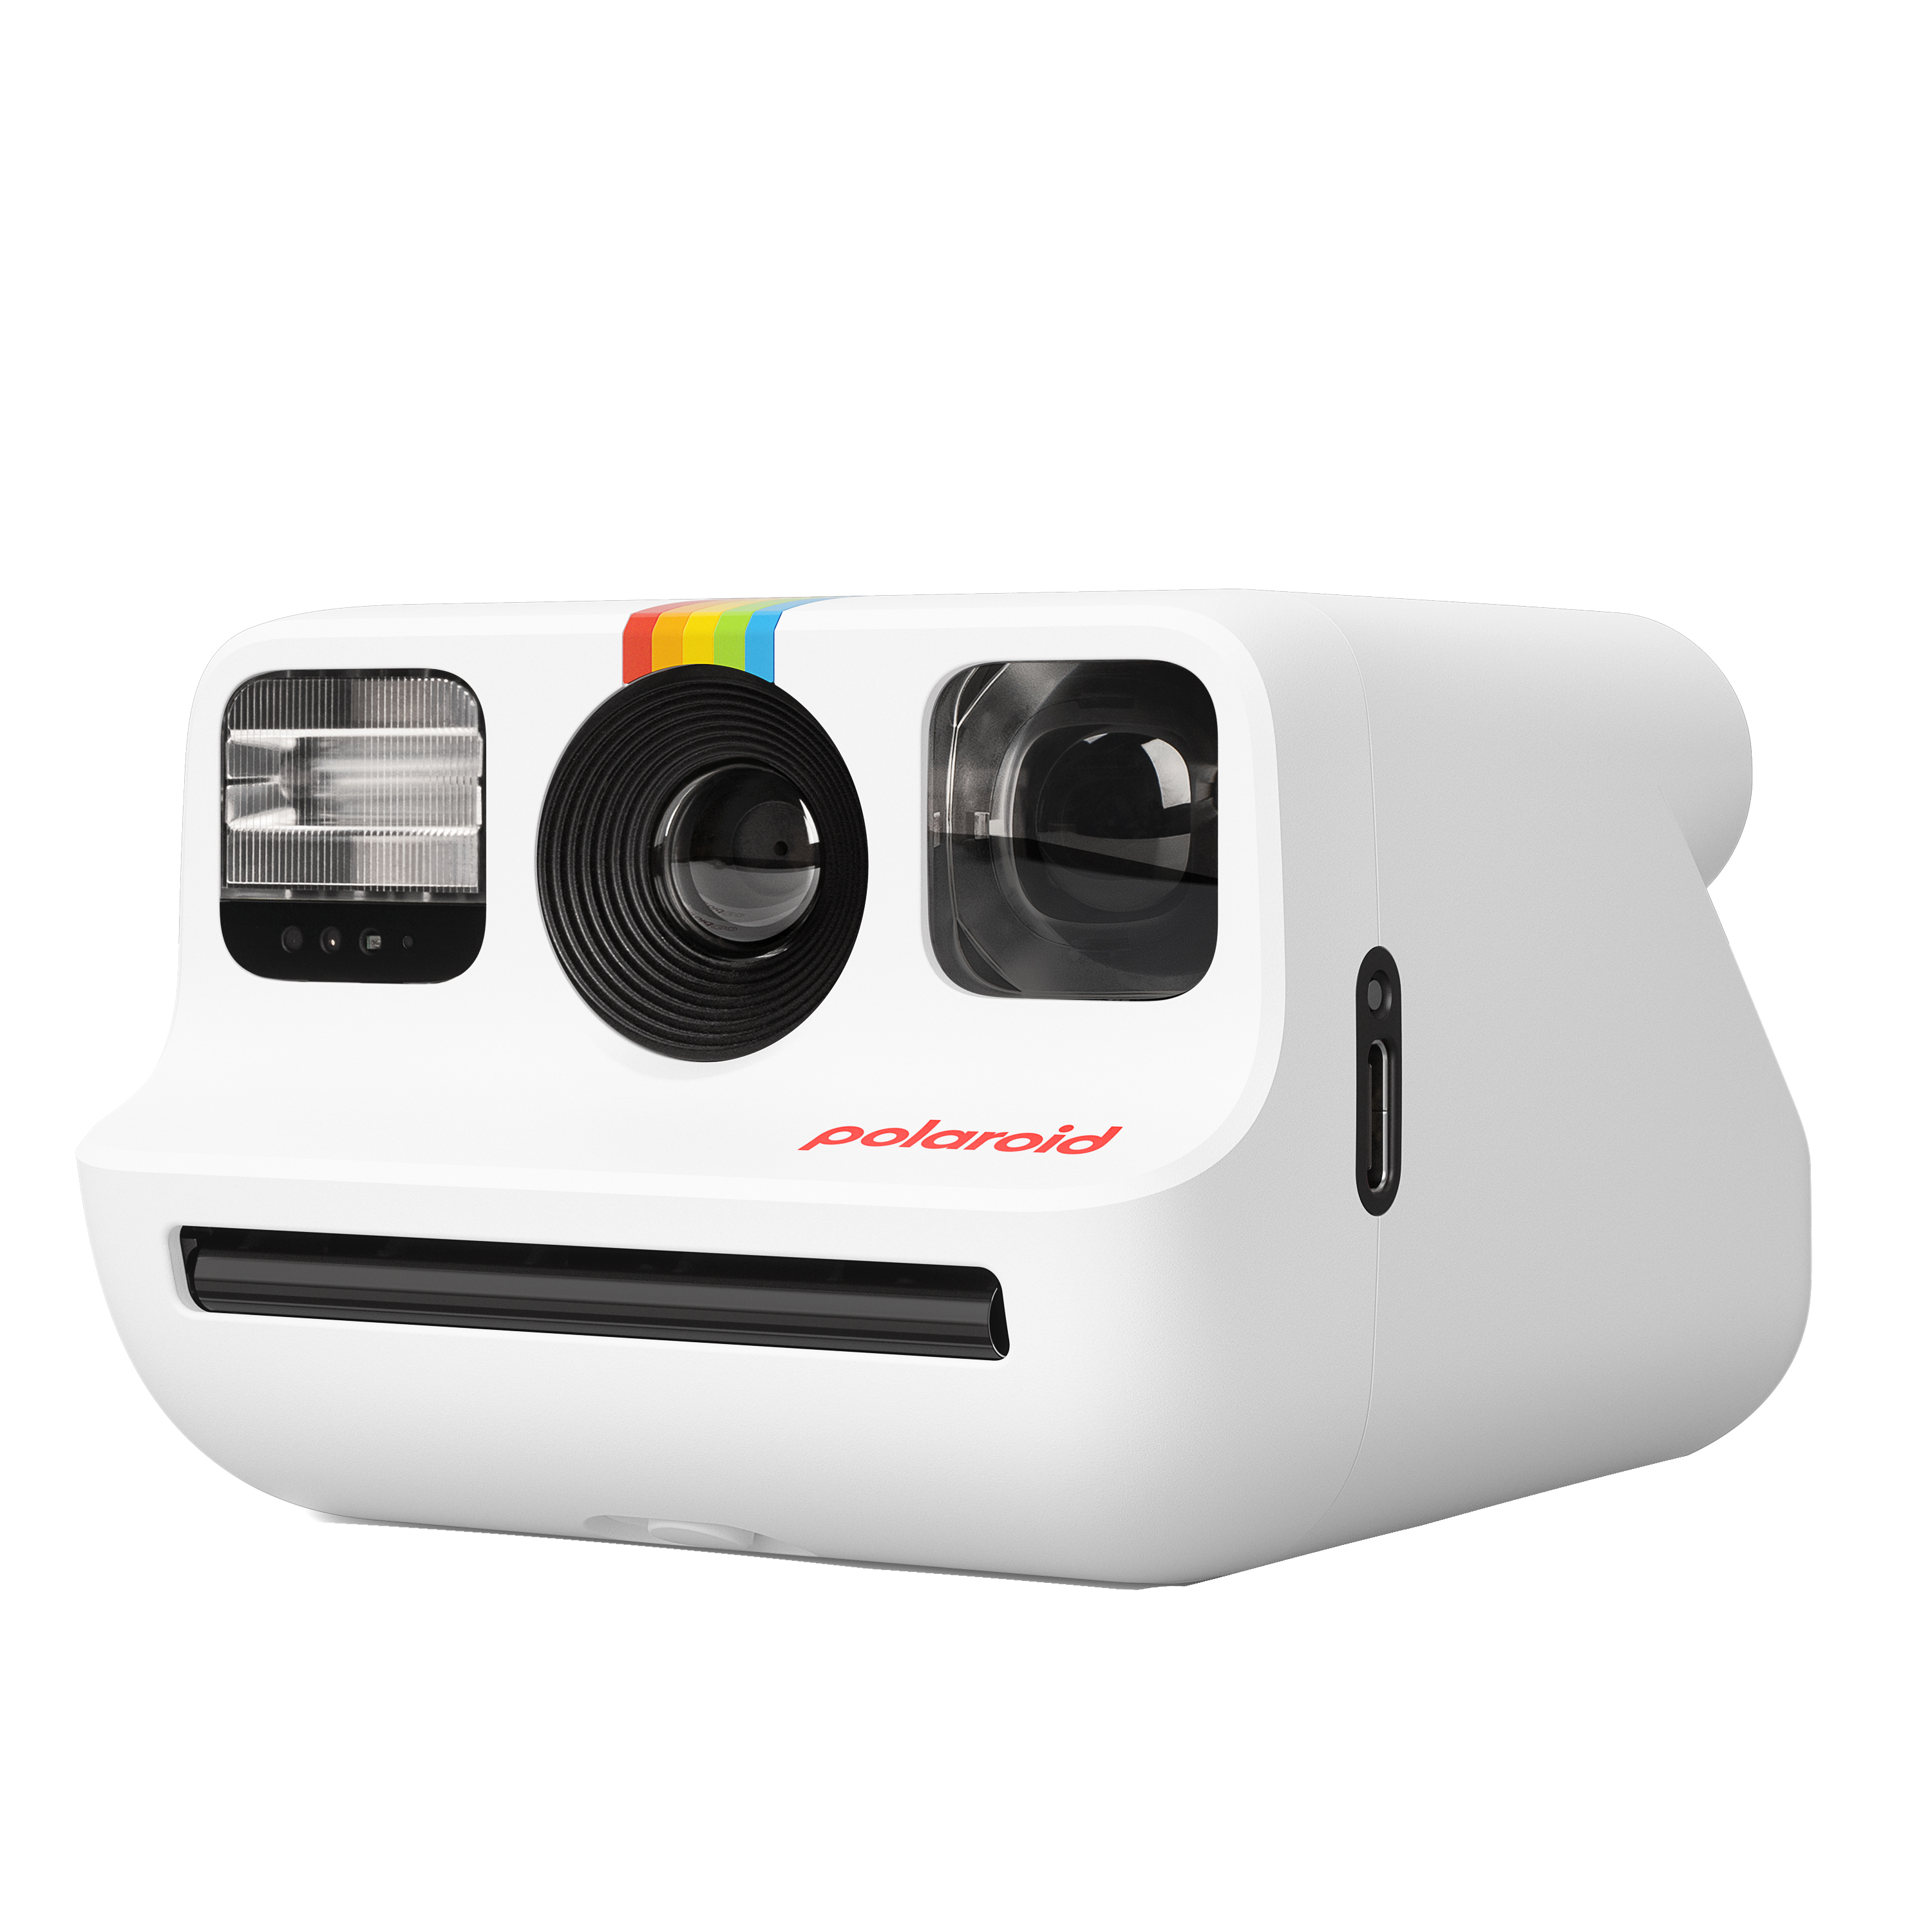 Polaroid Go Instant Camera Generation 2 - White - image 1 of 8